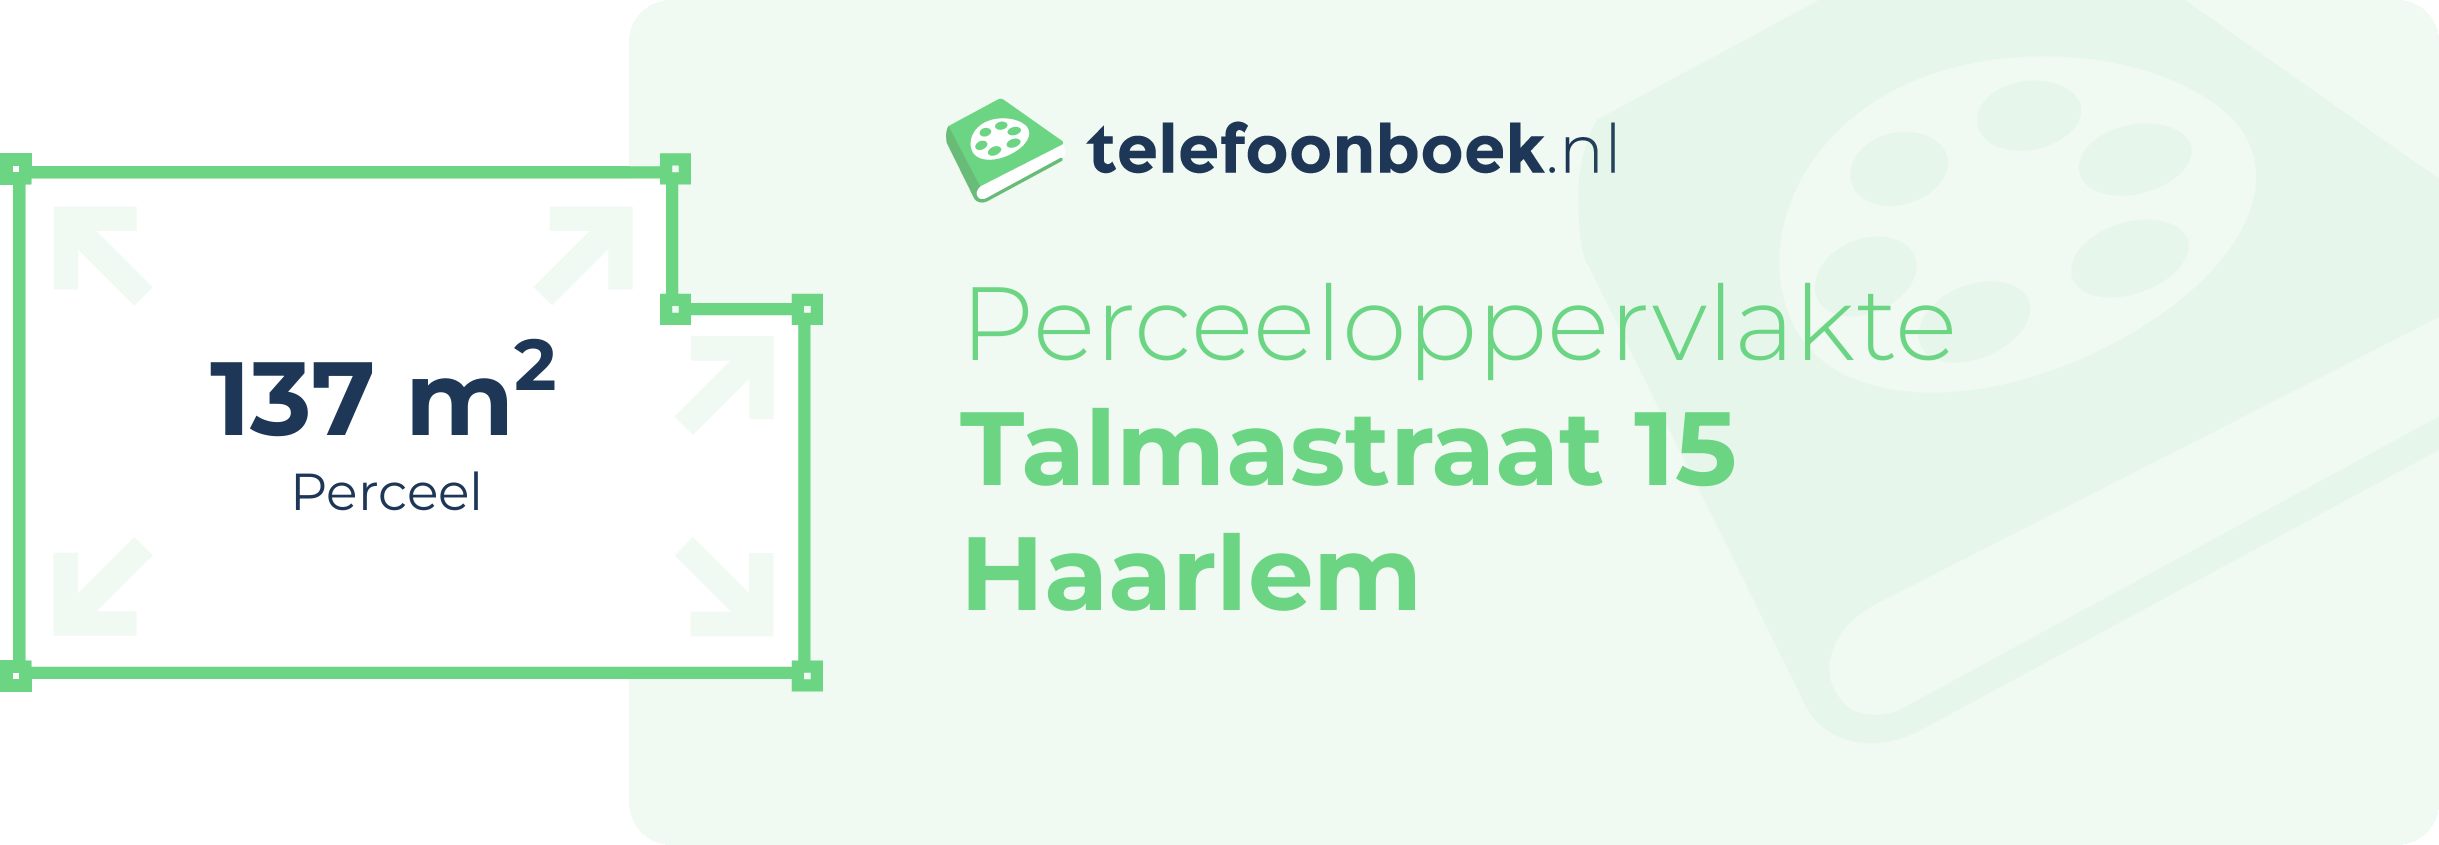 Perceeloppervlakte Talmastraat 15 Haarlem